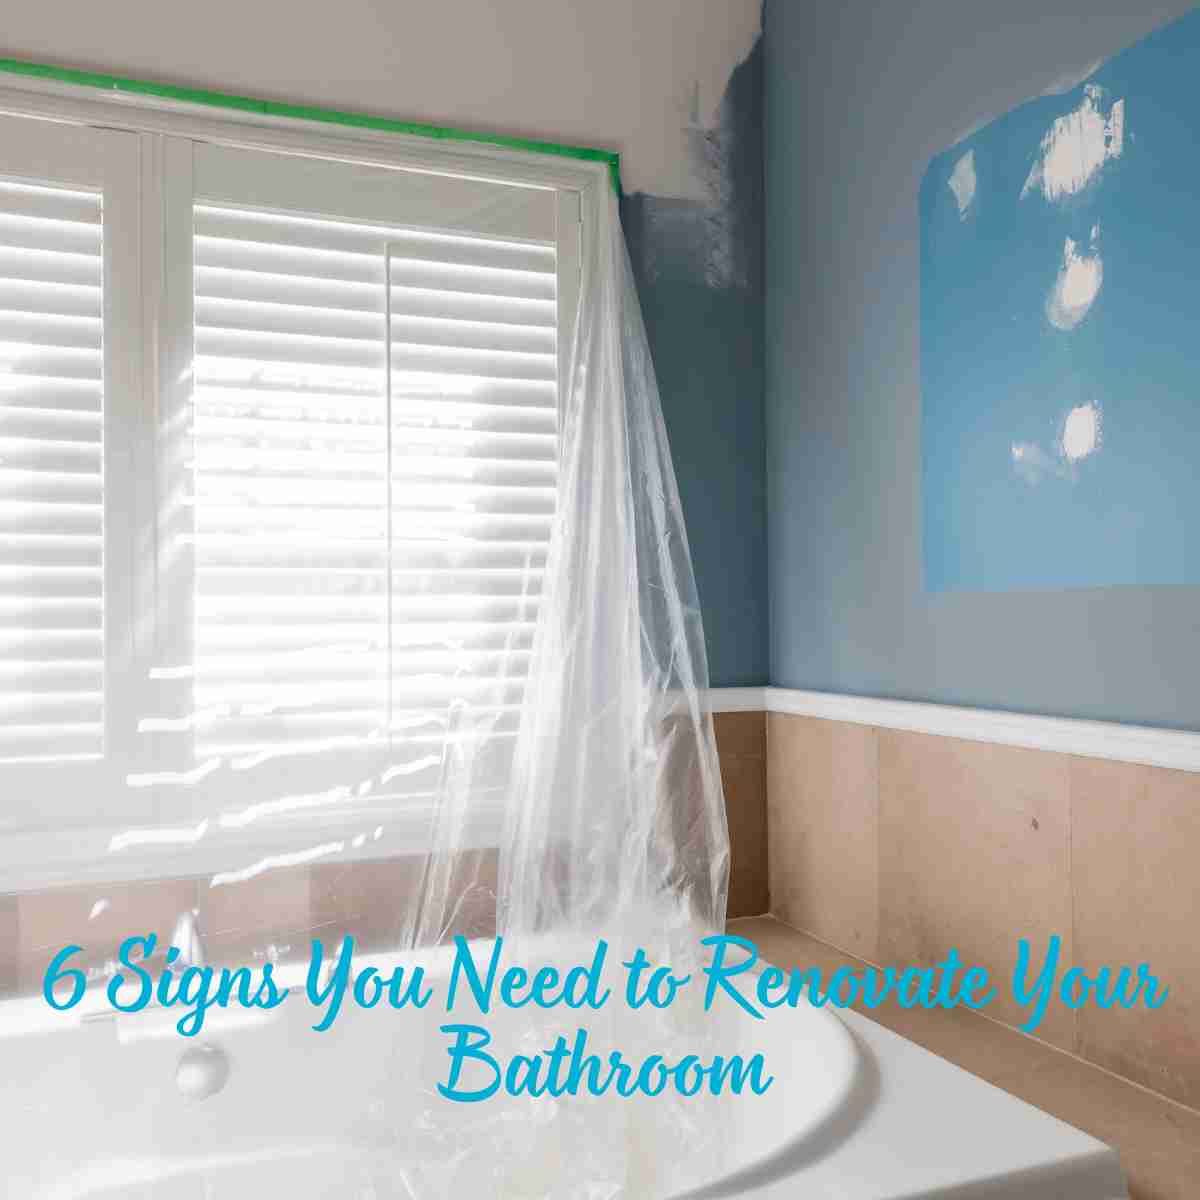 Need to Renovate Your Bathroom